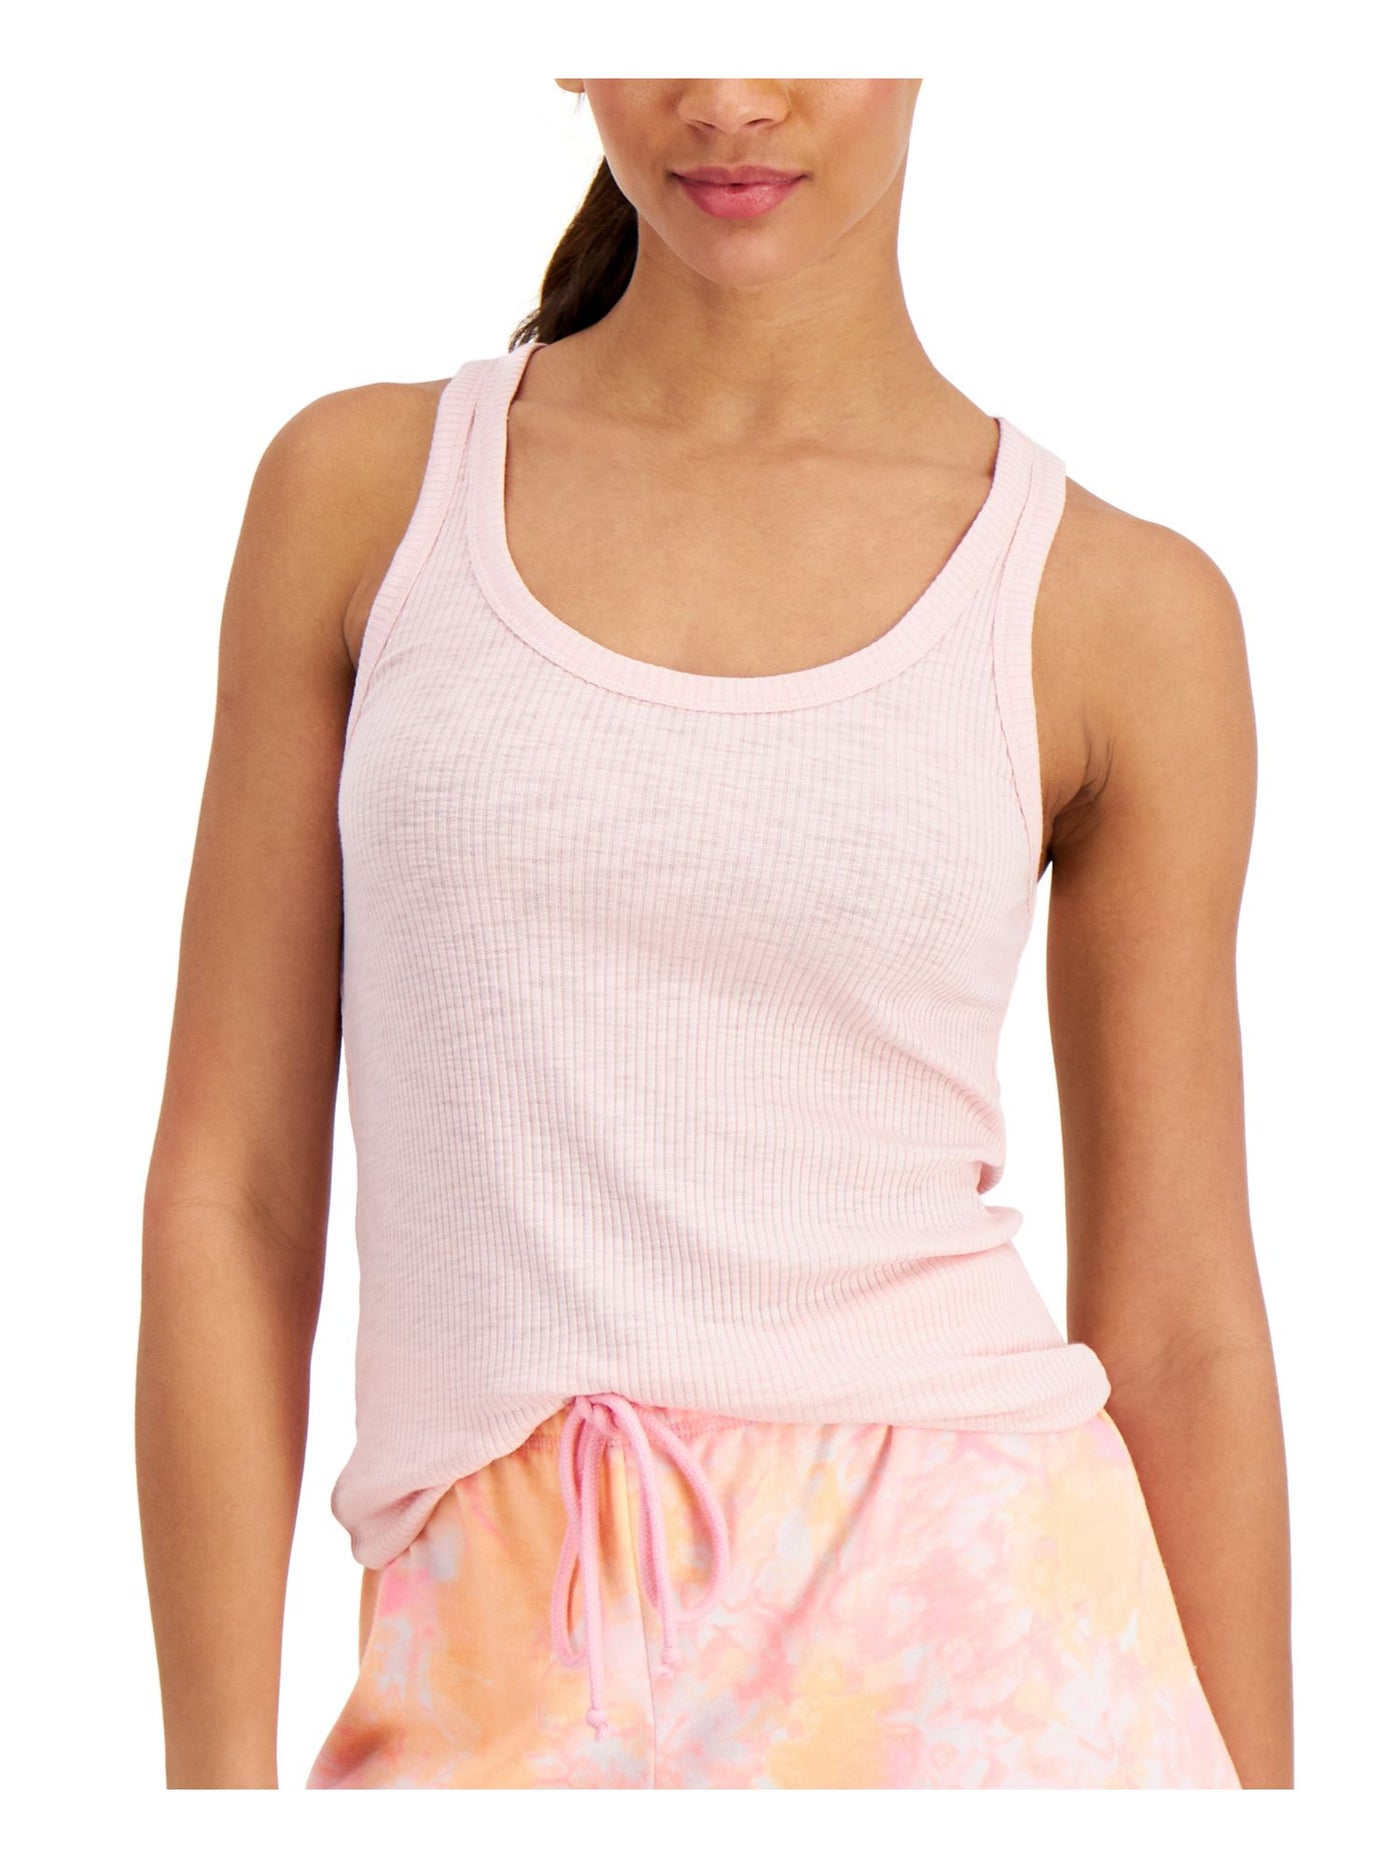 JENNI Intimates Pink Tank Sleep Shirt Pajama Top S